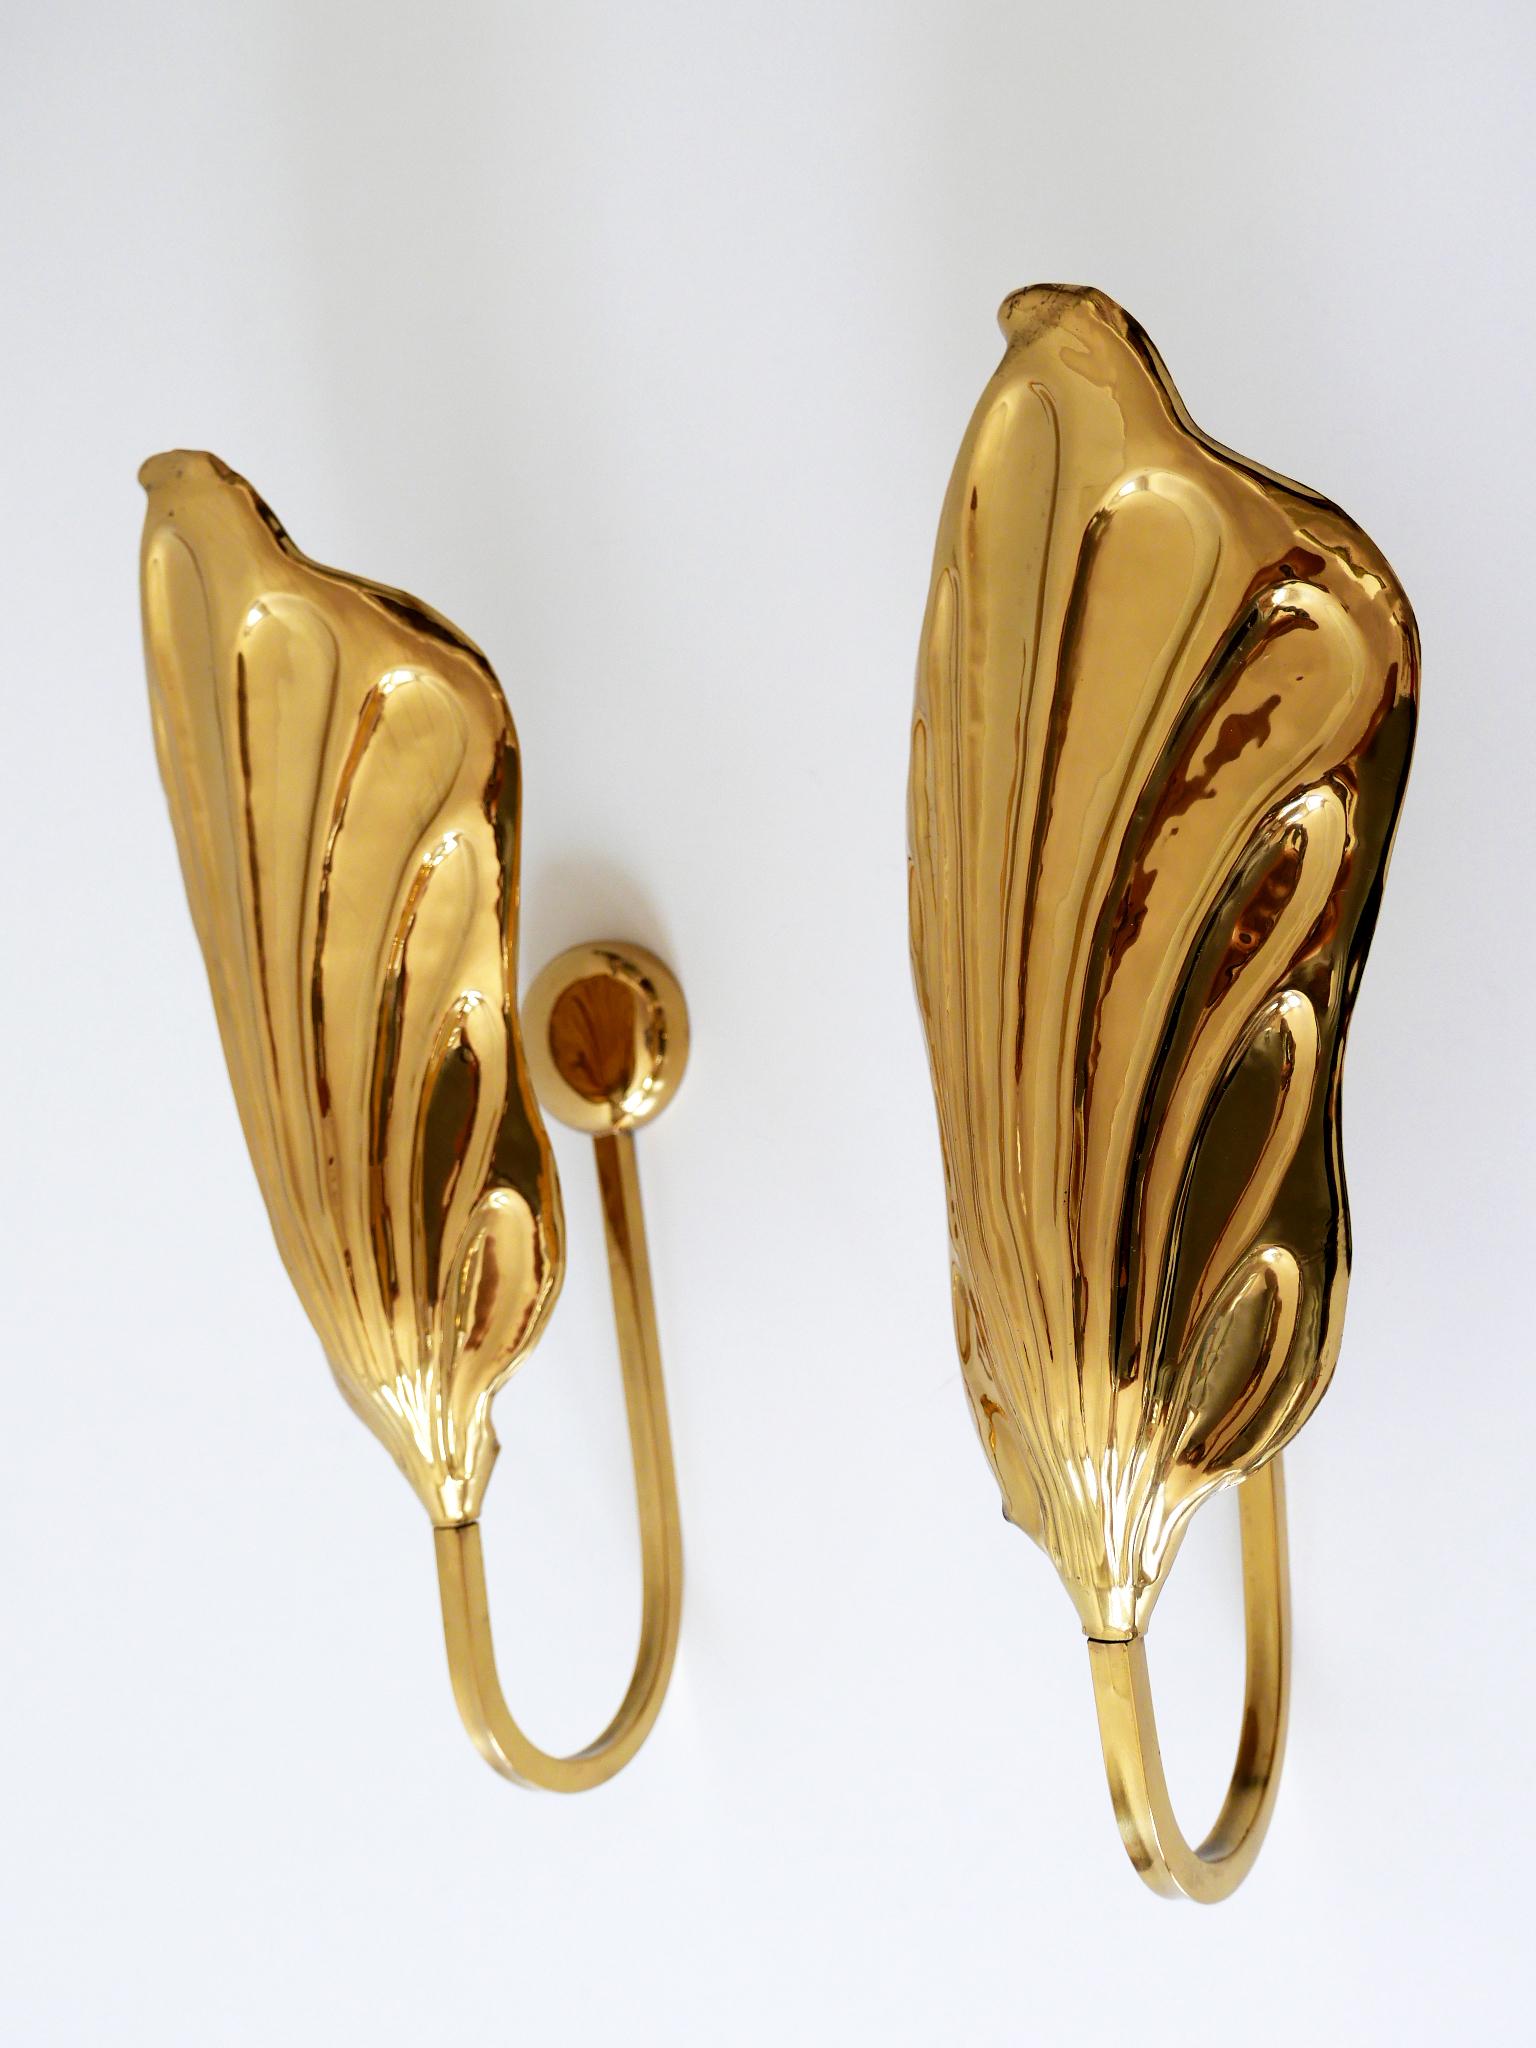 Set of Two Brass Leaf Wall Lamps or Sconces by Carlo Giorgi for Bottega Gadda 1